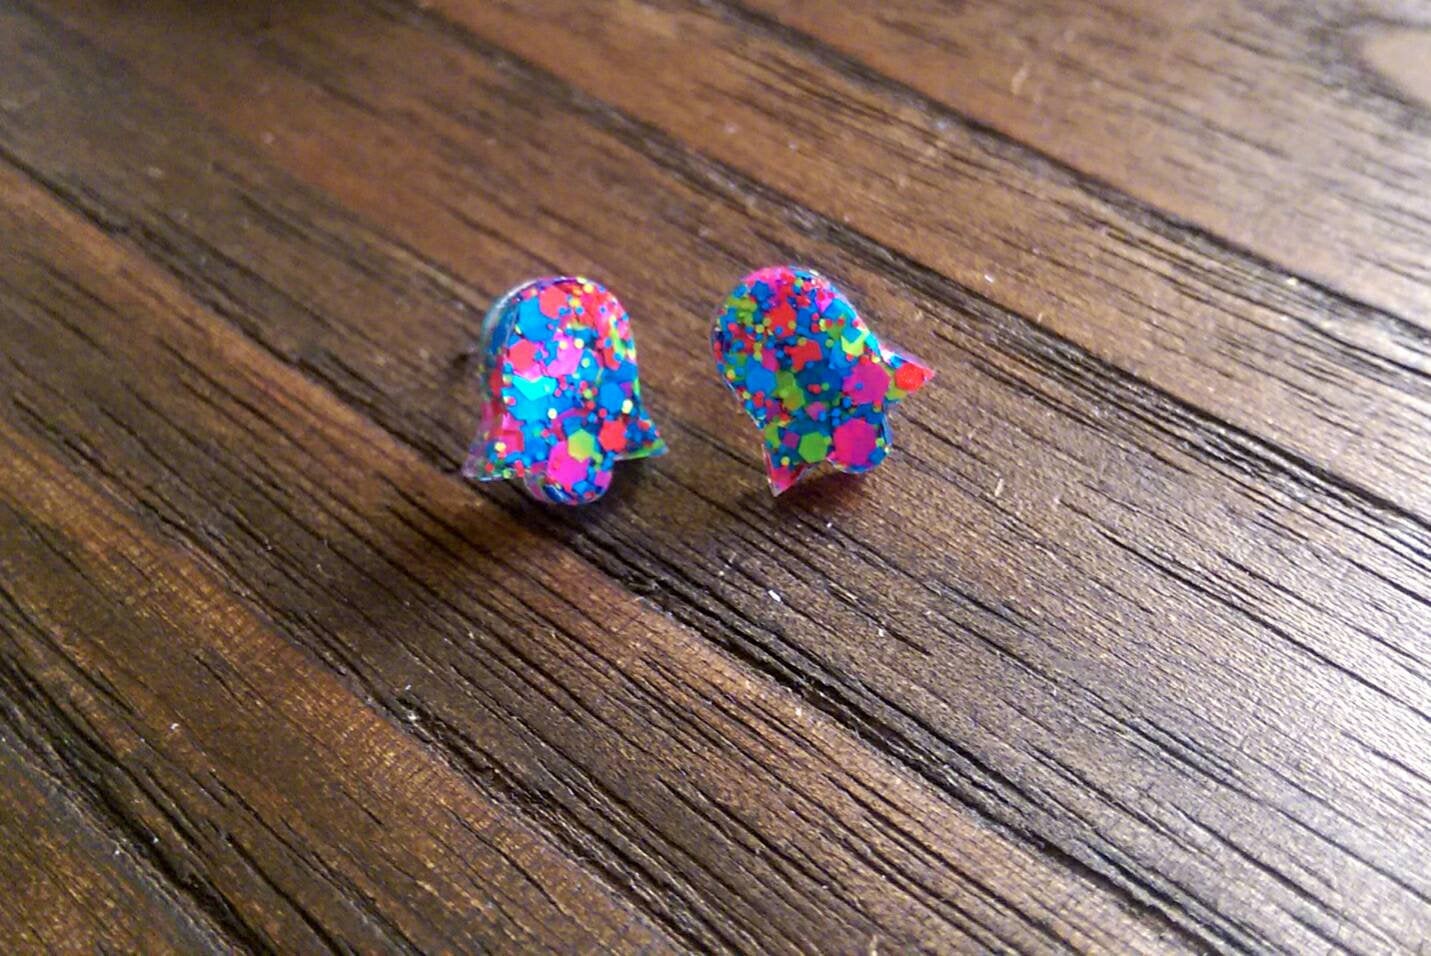 Bell Flower Resin Stud Earrings, Neon Mix Earrings. Stainless Steel Stud Earrings.